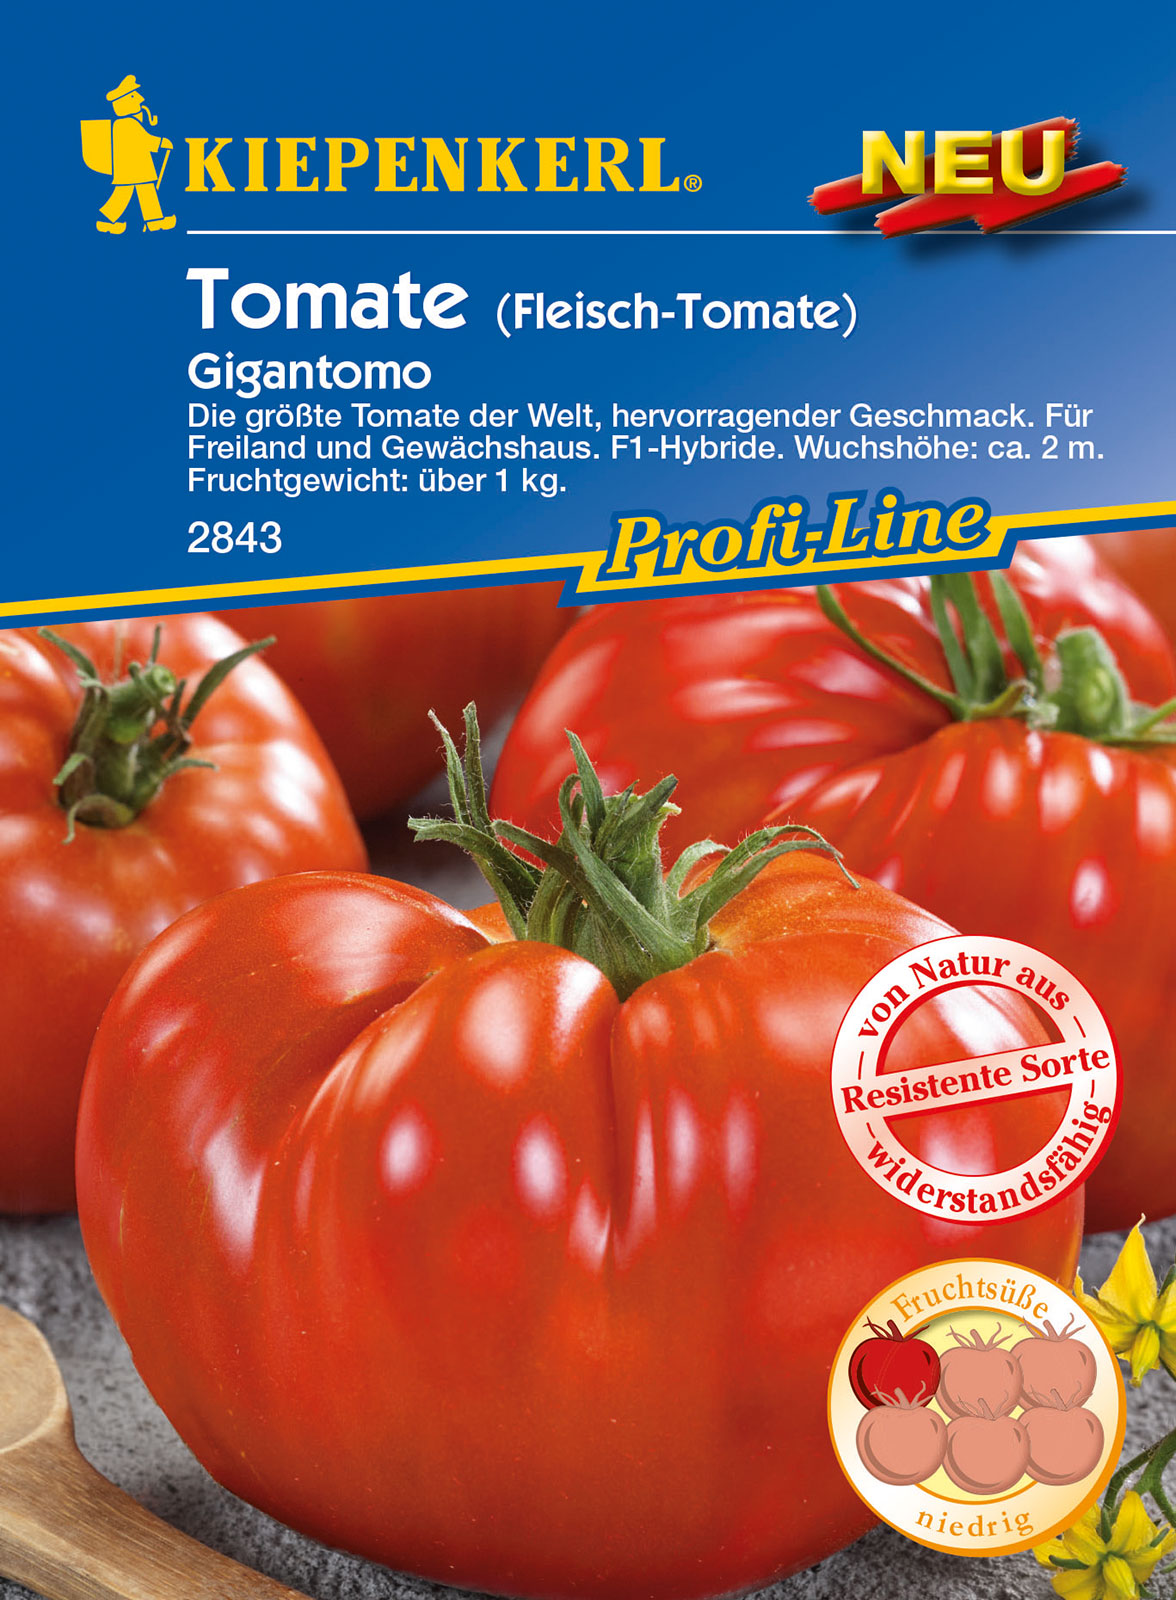 Giant tomatoes Gigantomo Kiepenkerl 8 pcs